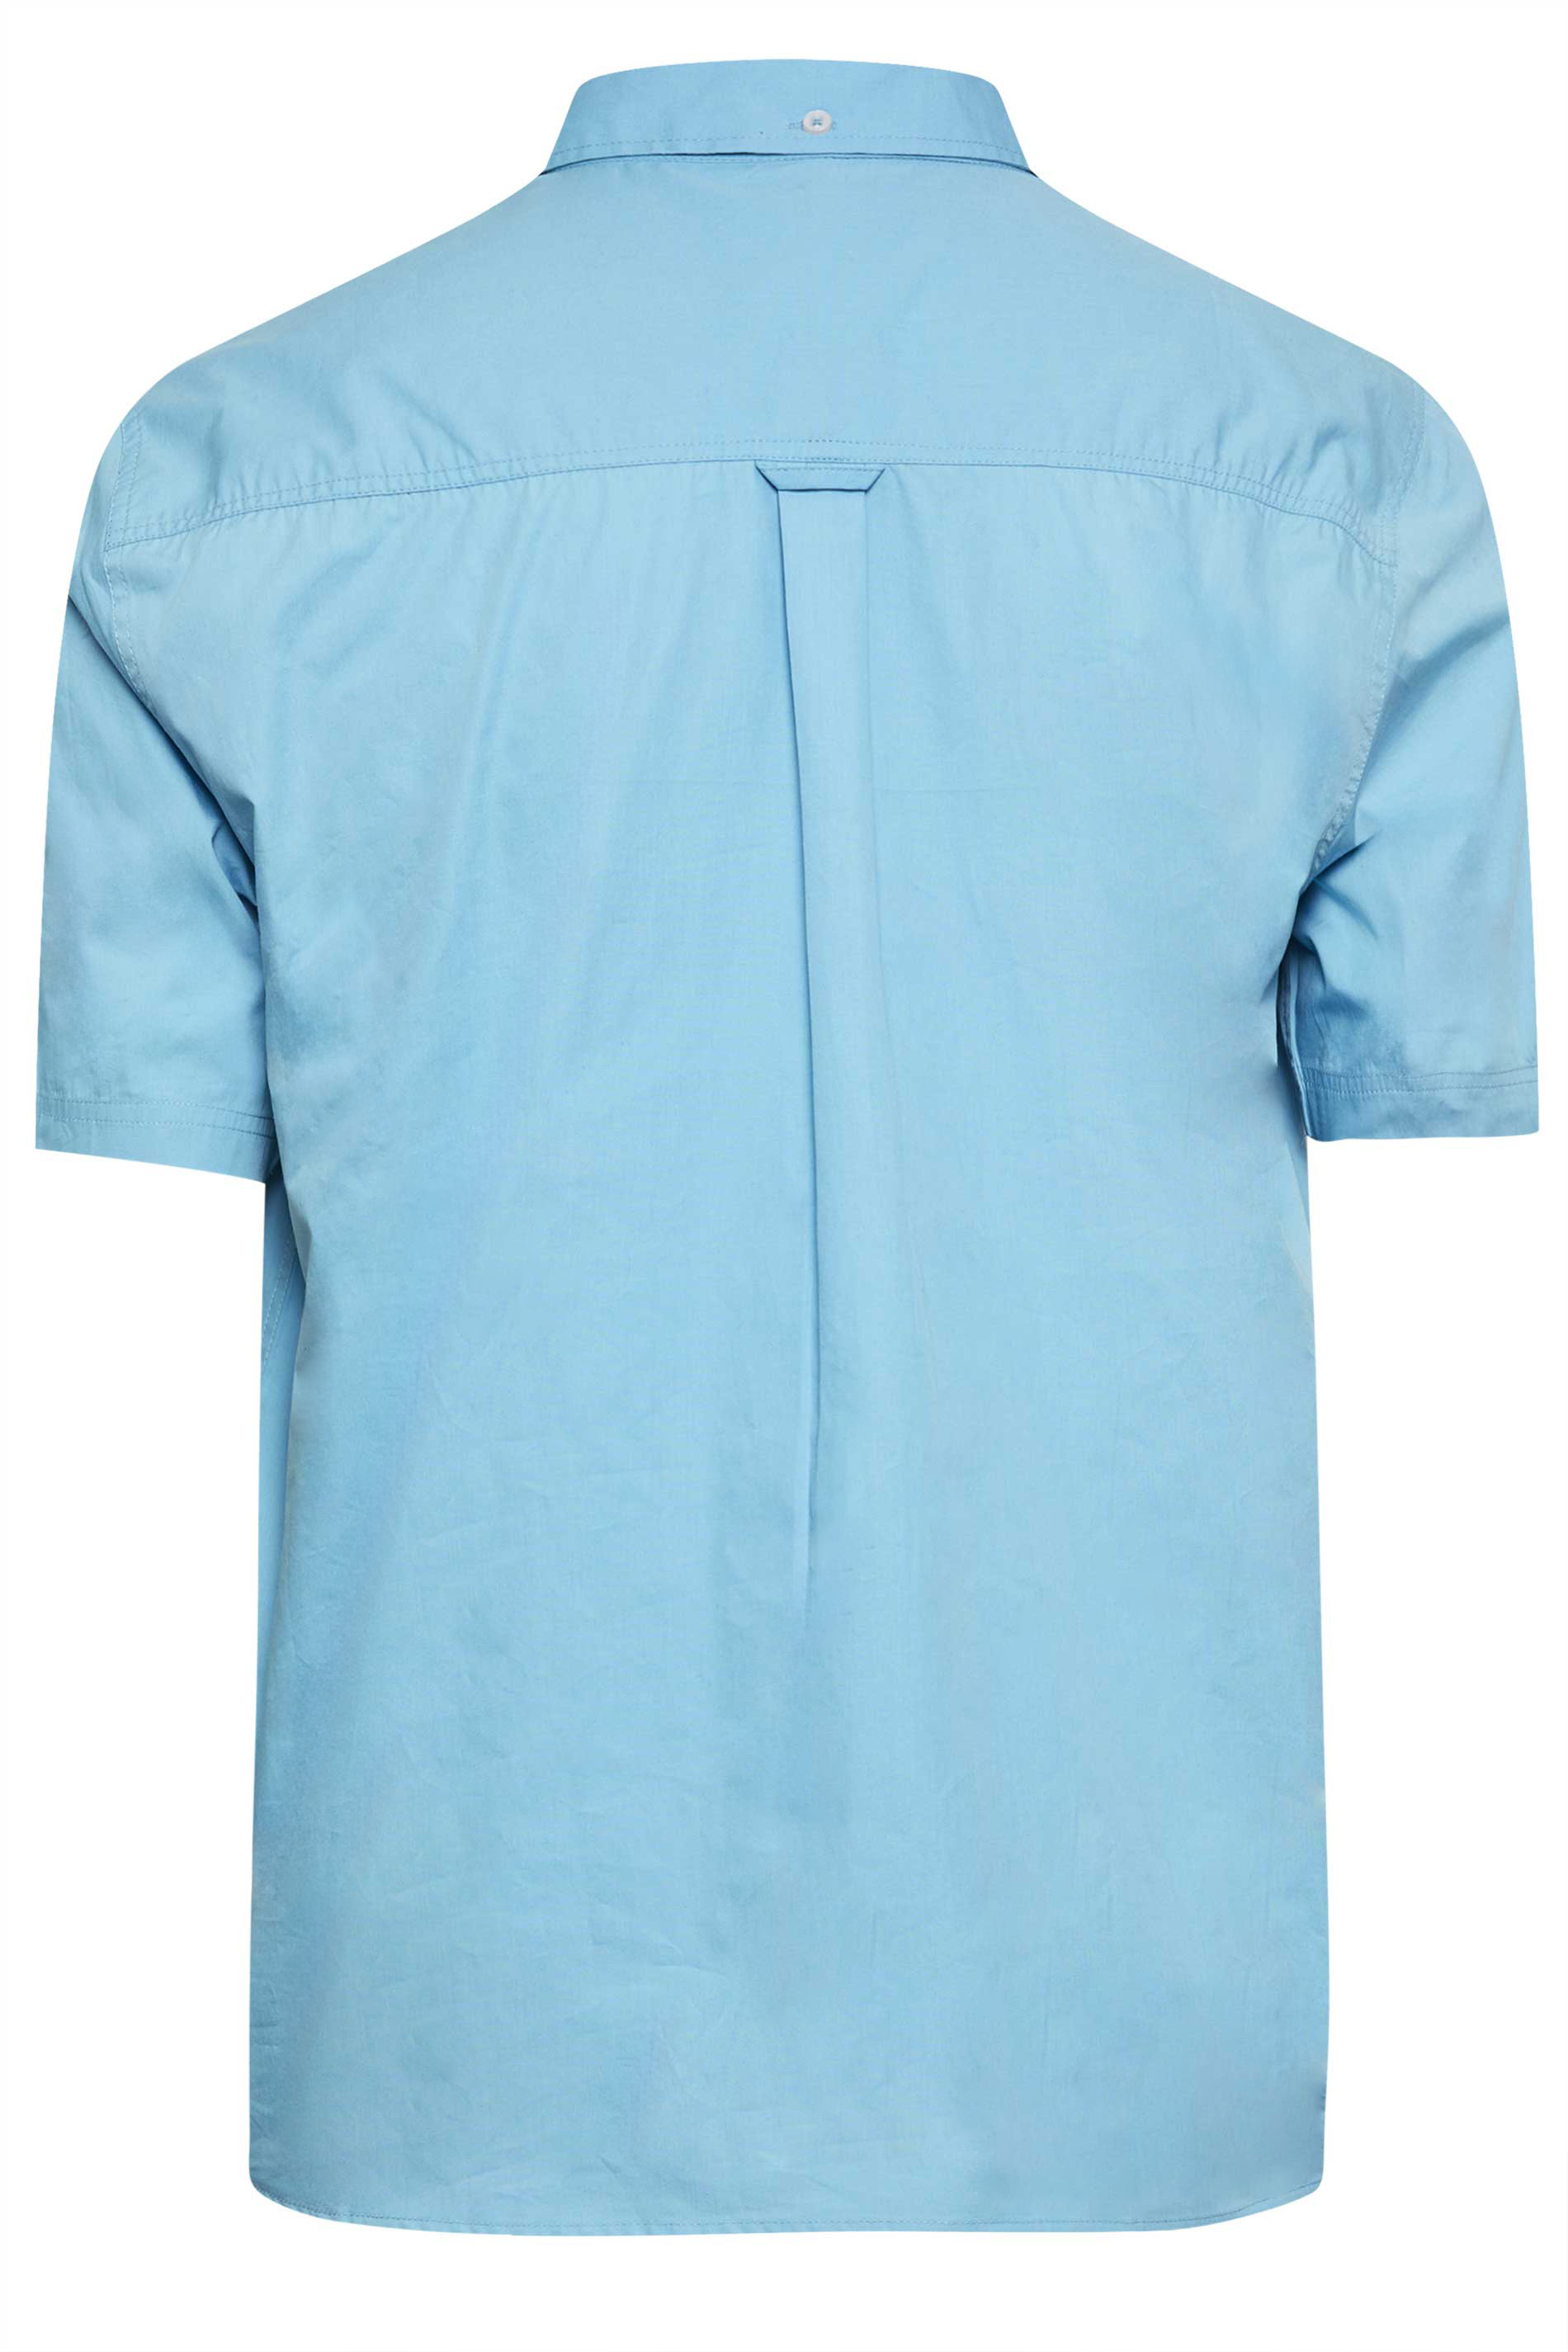 BadRhino Big & Tall Light Blue Poplin Shirt | BadRhino 3